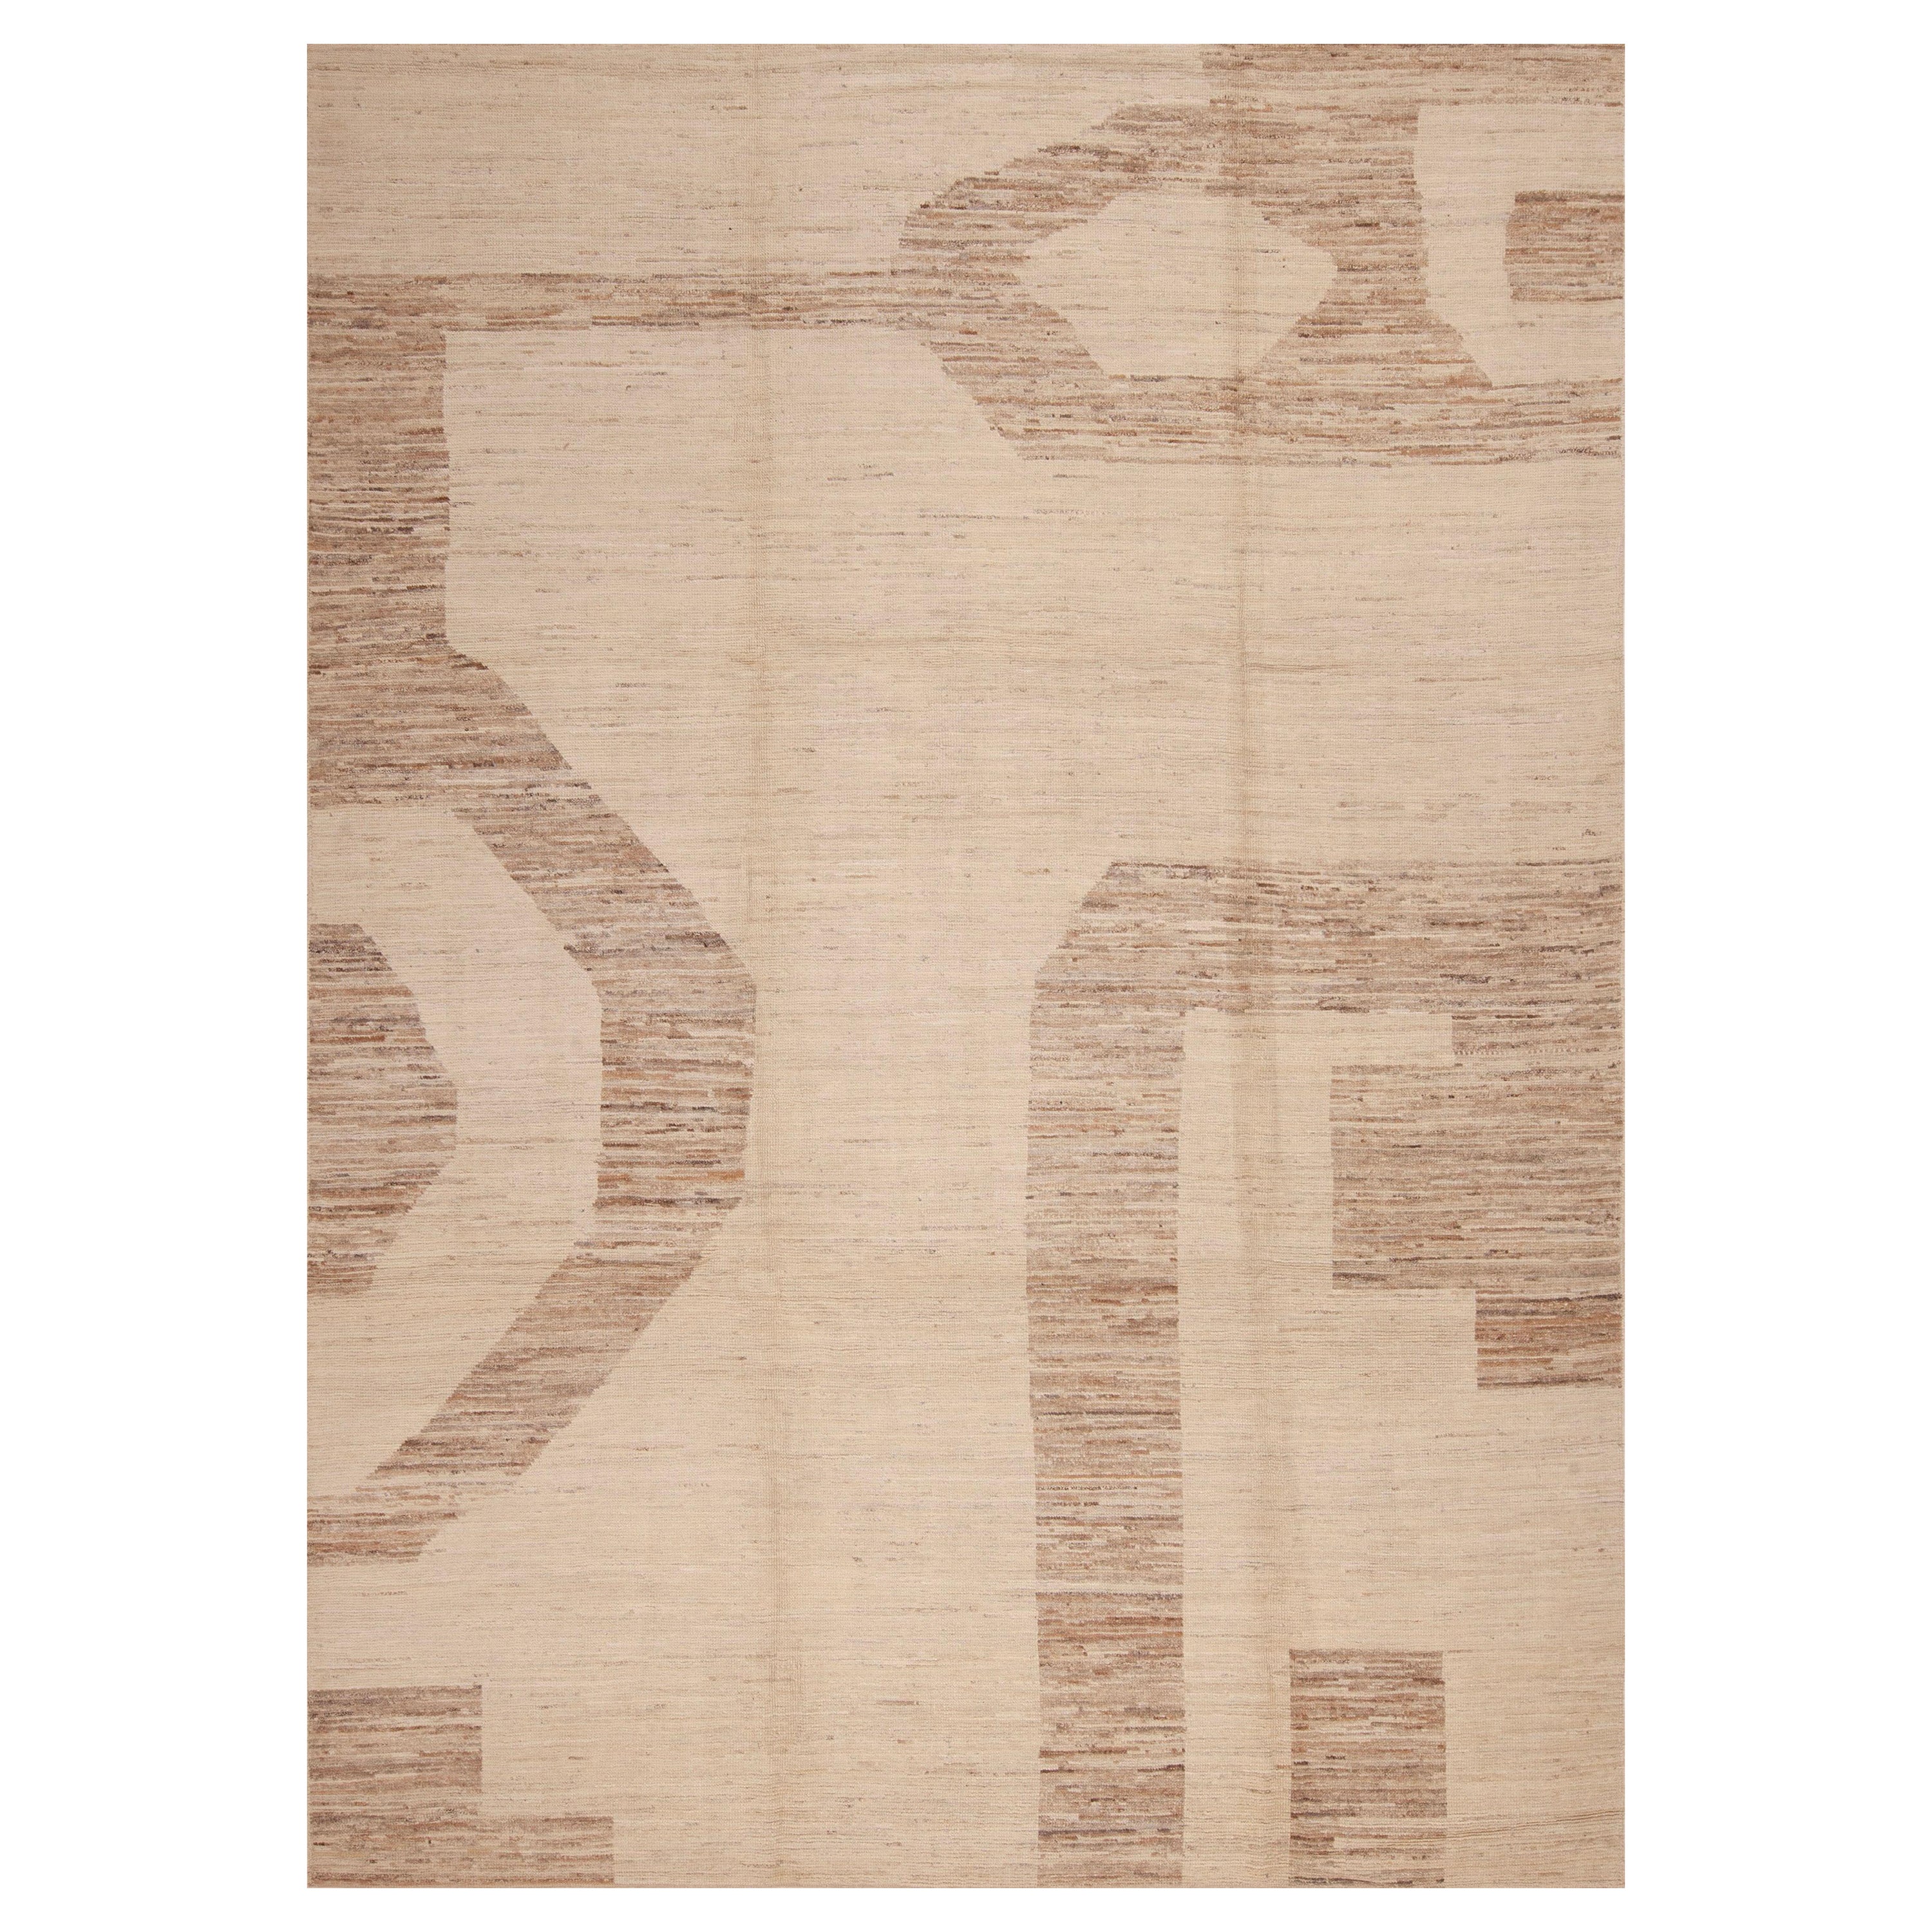 Collection Nazmiyal, tapis tribal géométrique moderne de taille 8'7" x 11'10" en vente